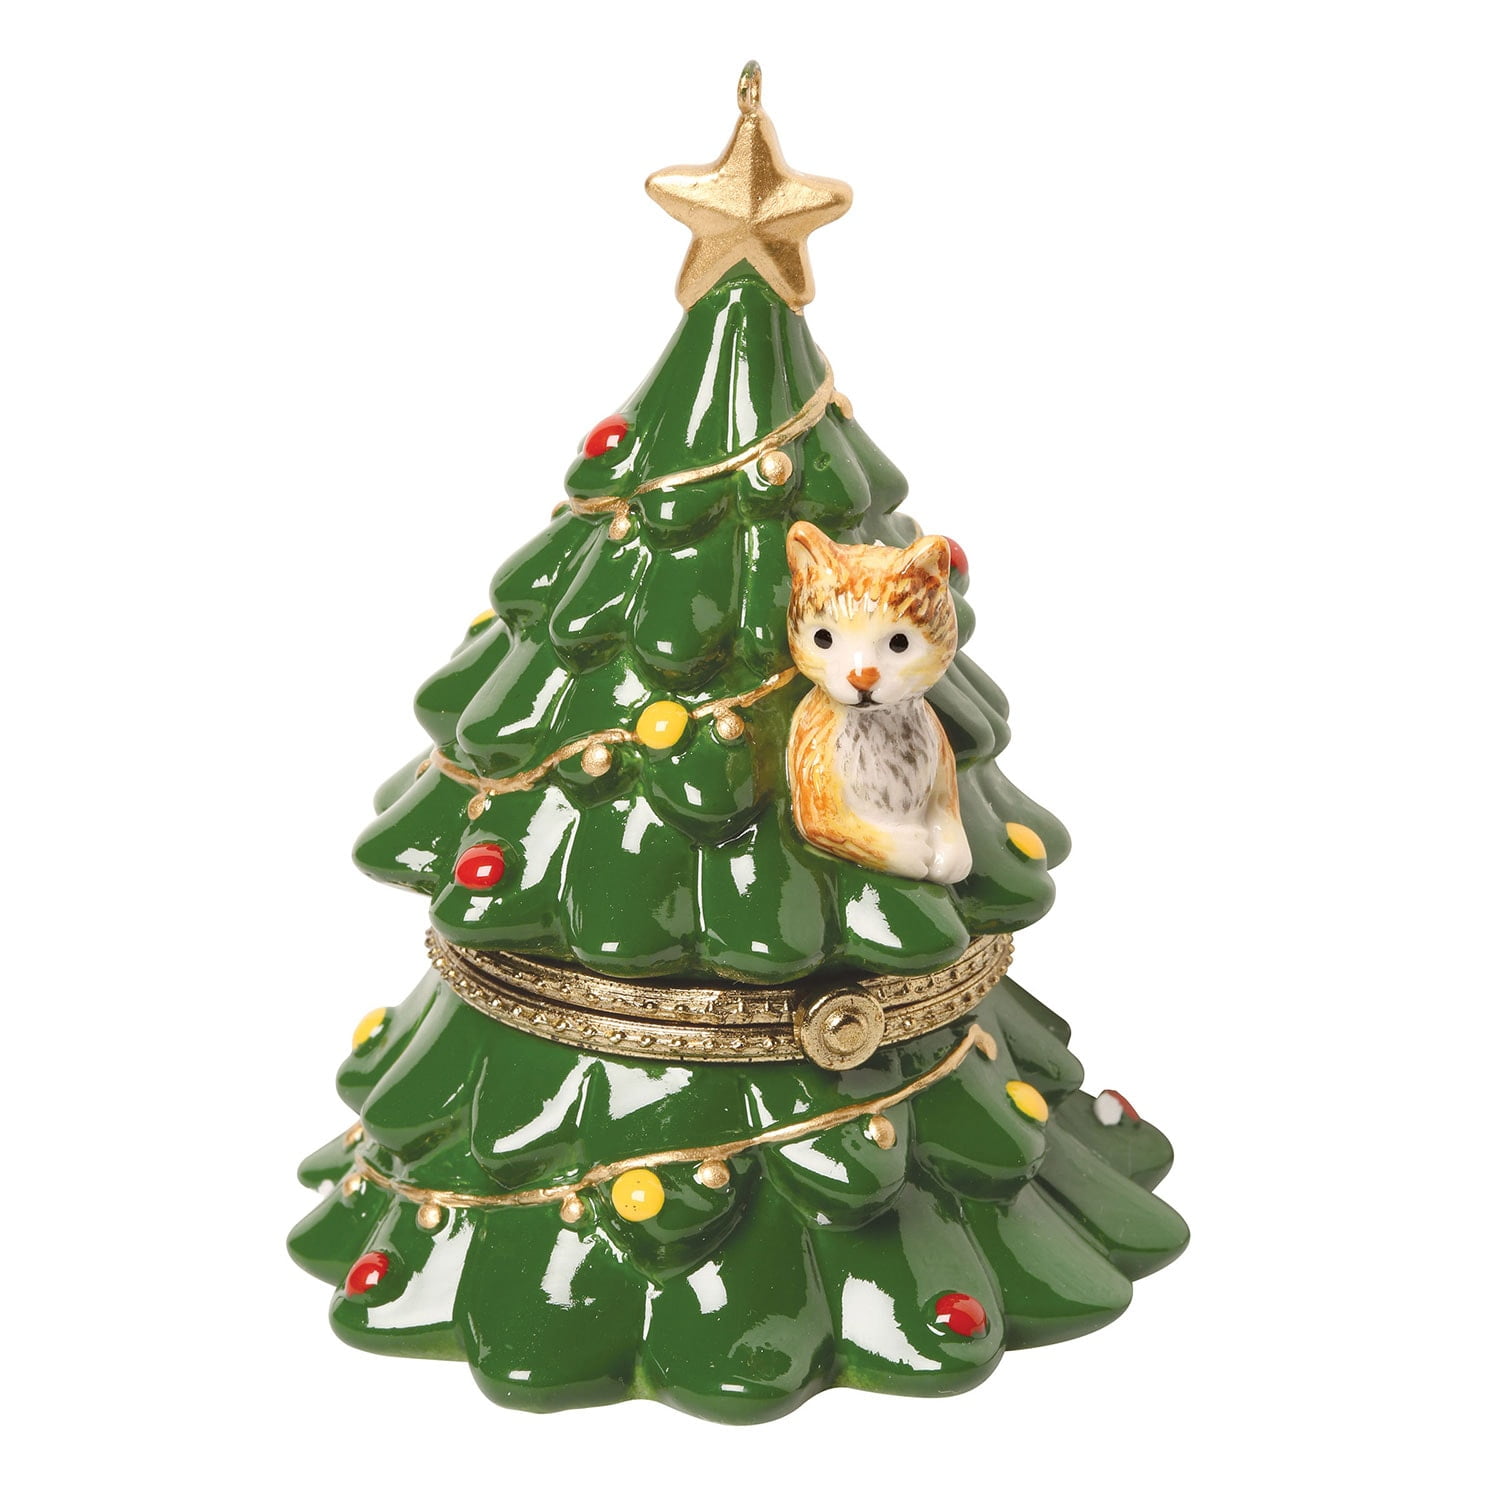 4pc 19x13mm Enameled Christmas Ornament w/Snowflake Charms,  Green/White/Gold - Bead Box Bargains